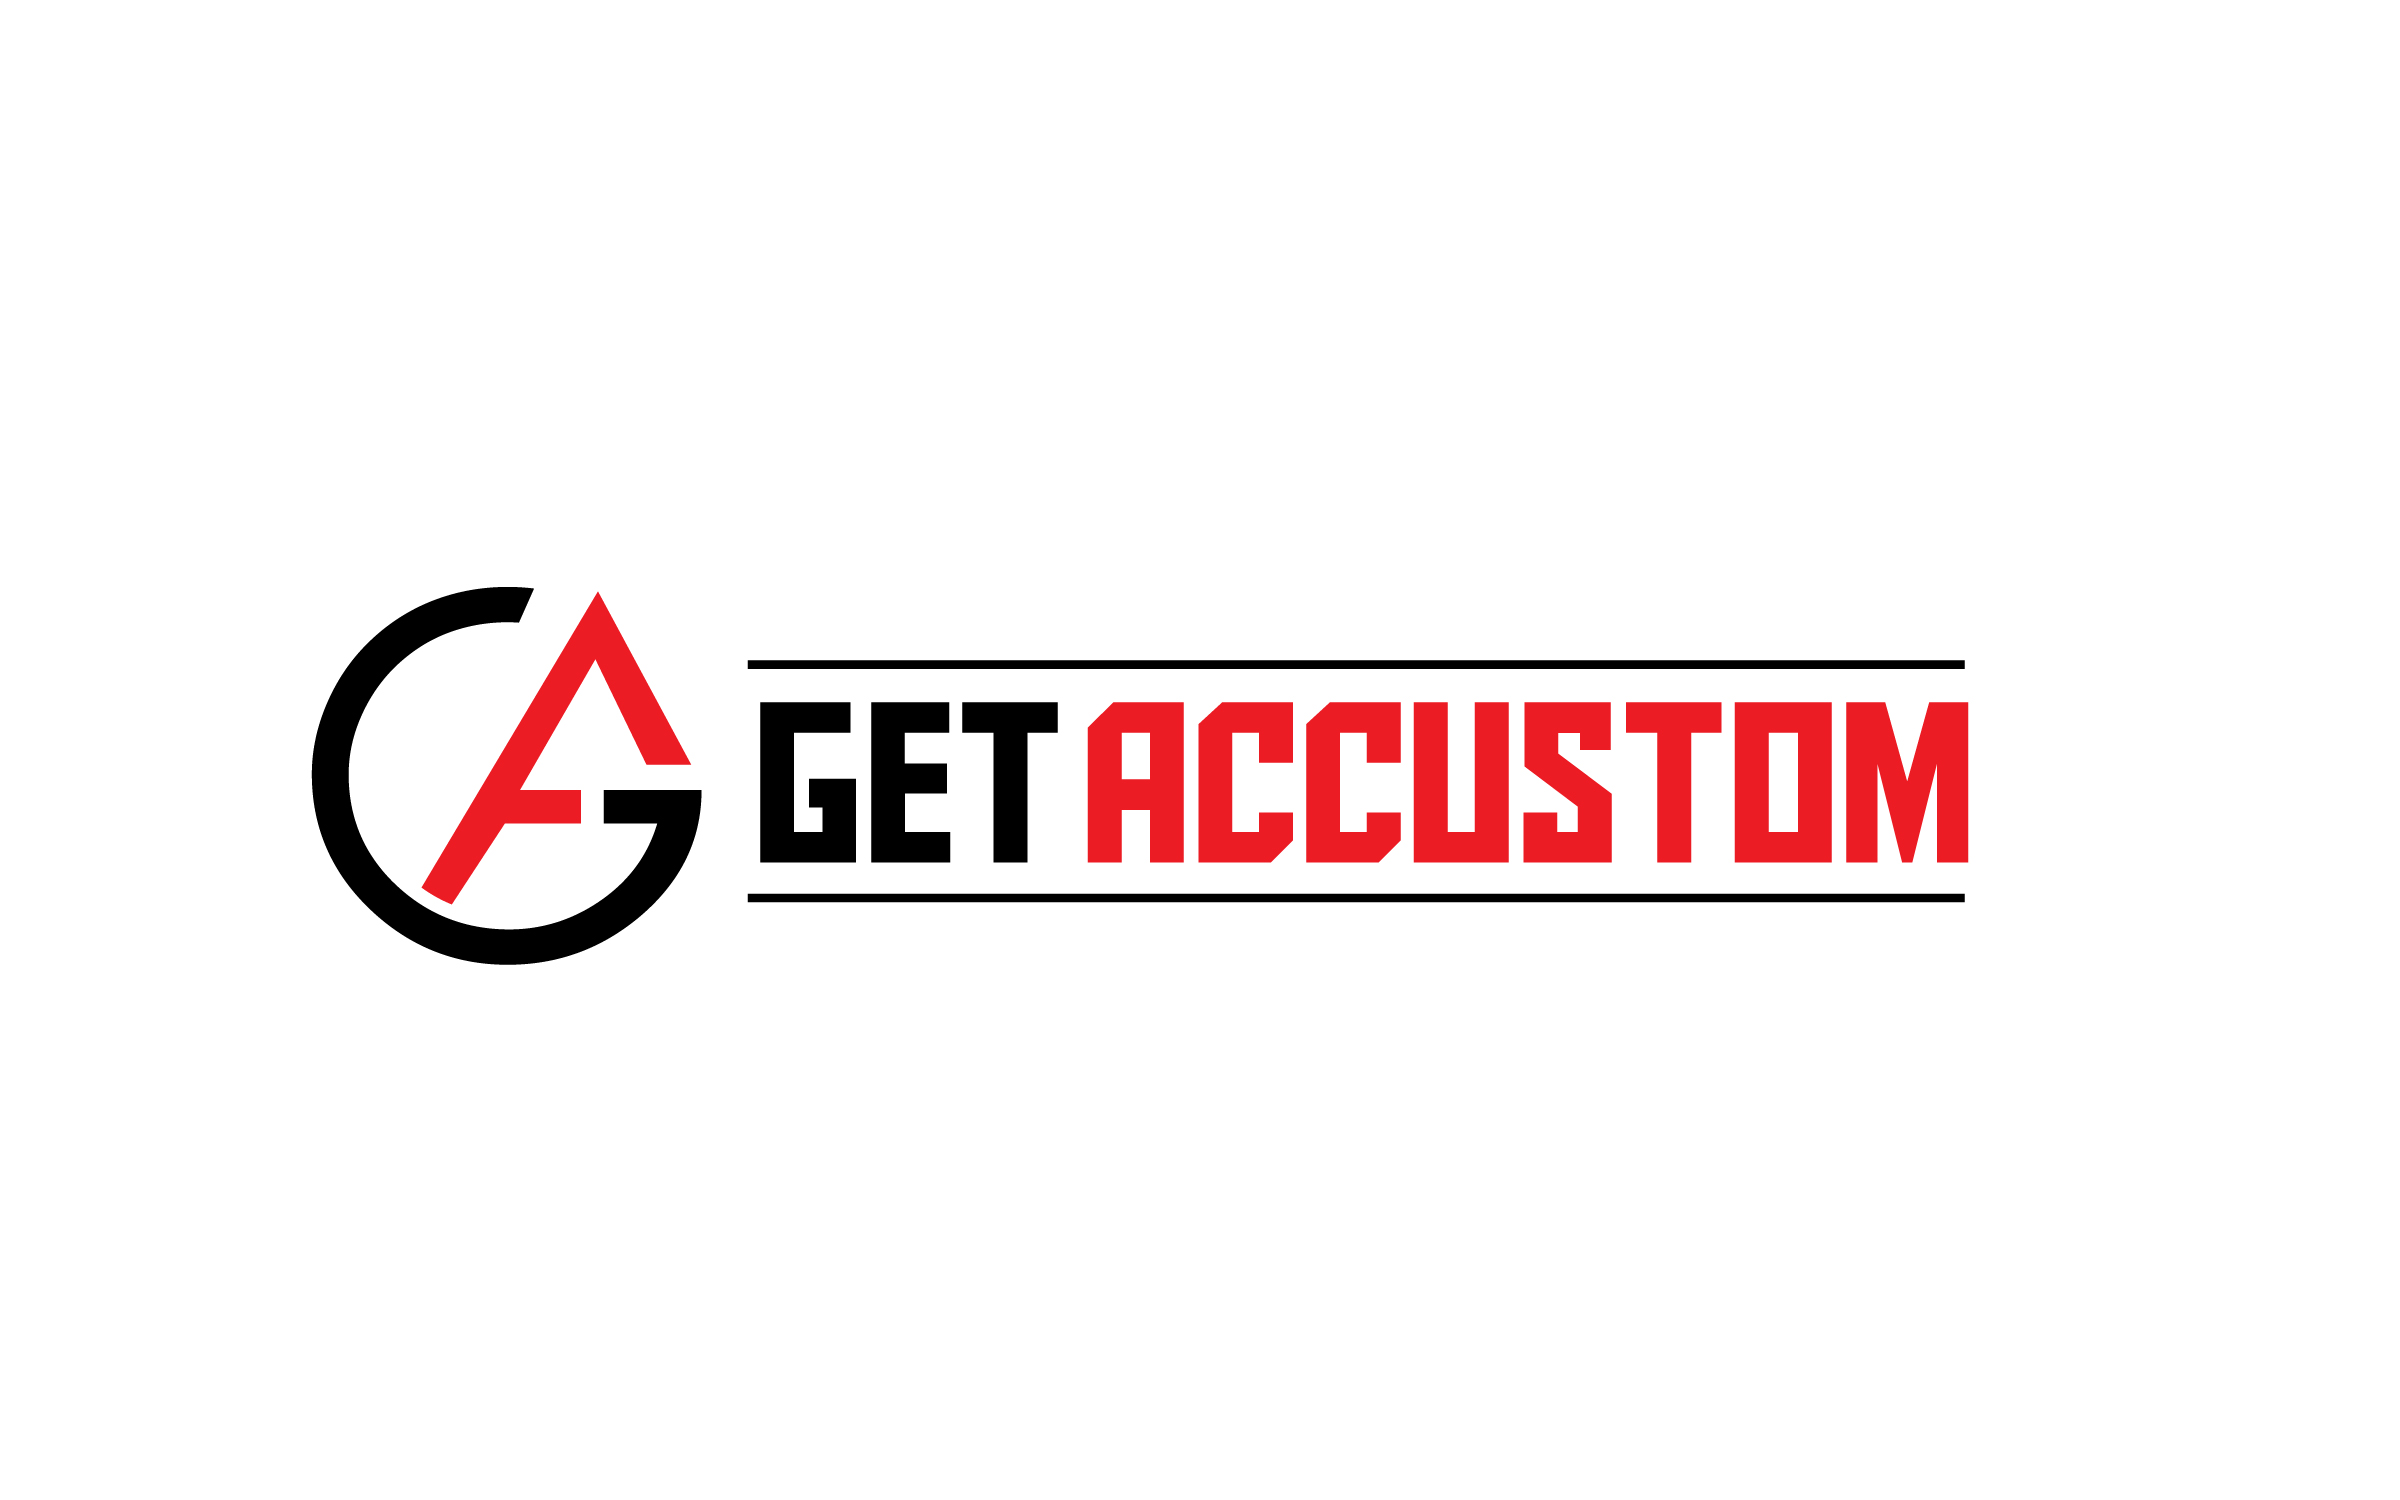 Get Accustom